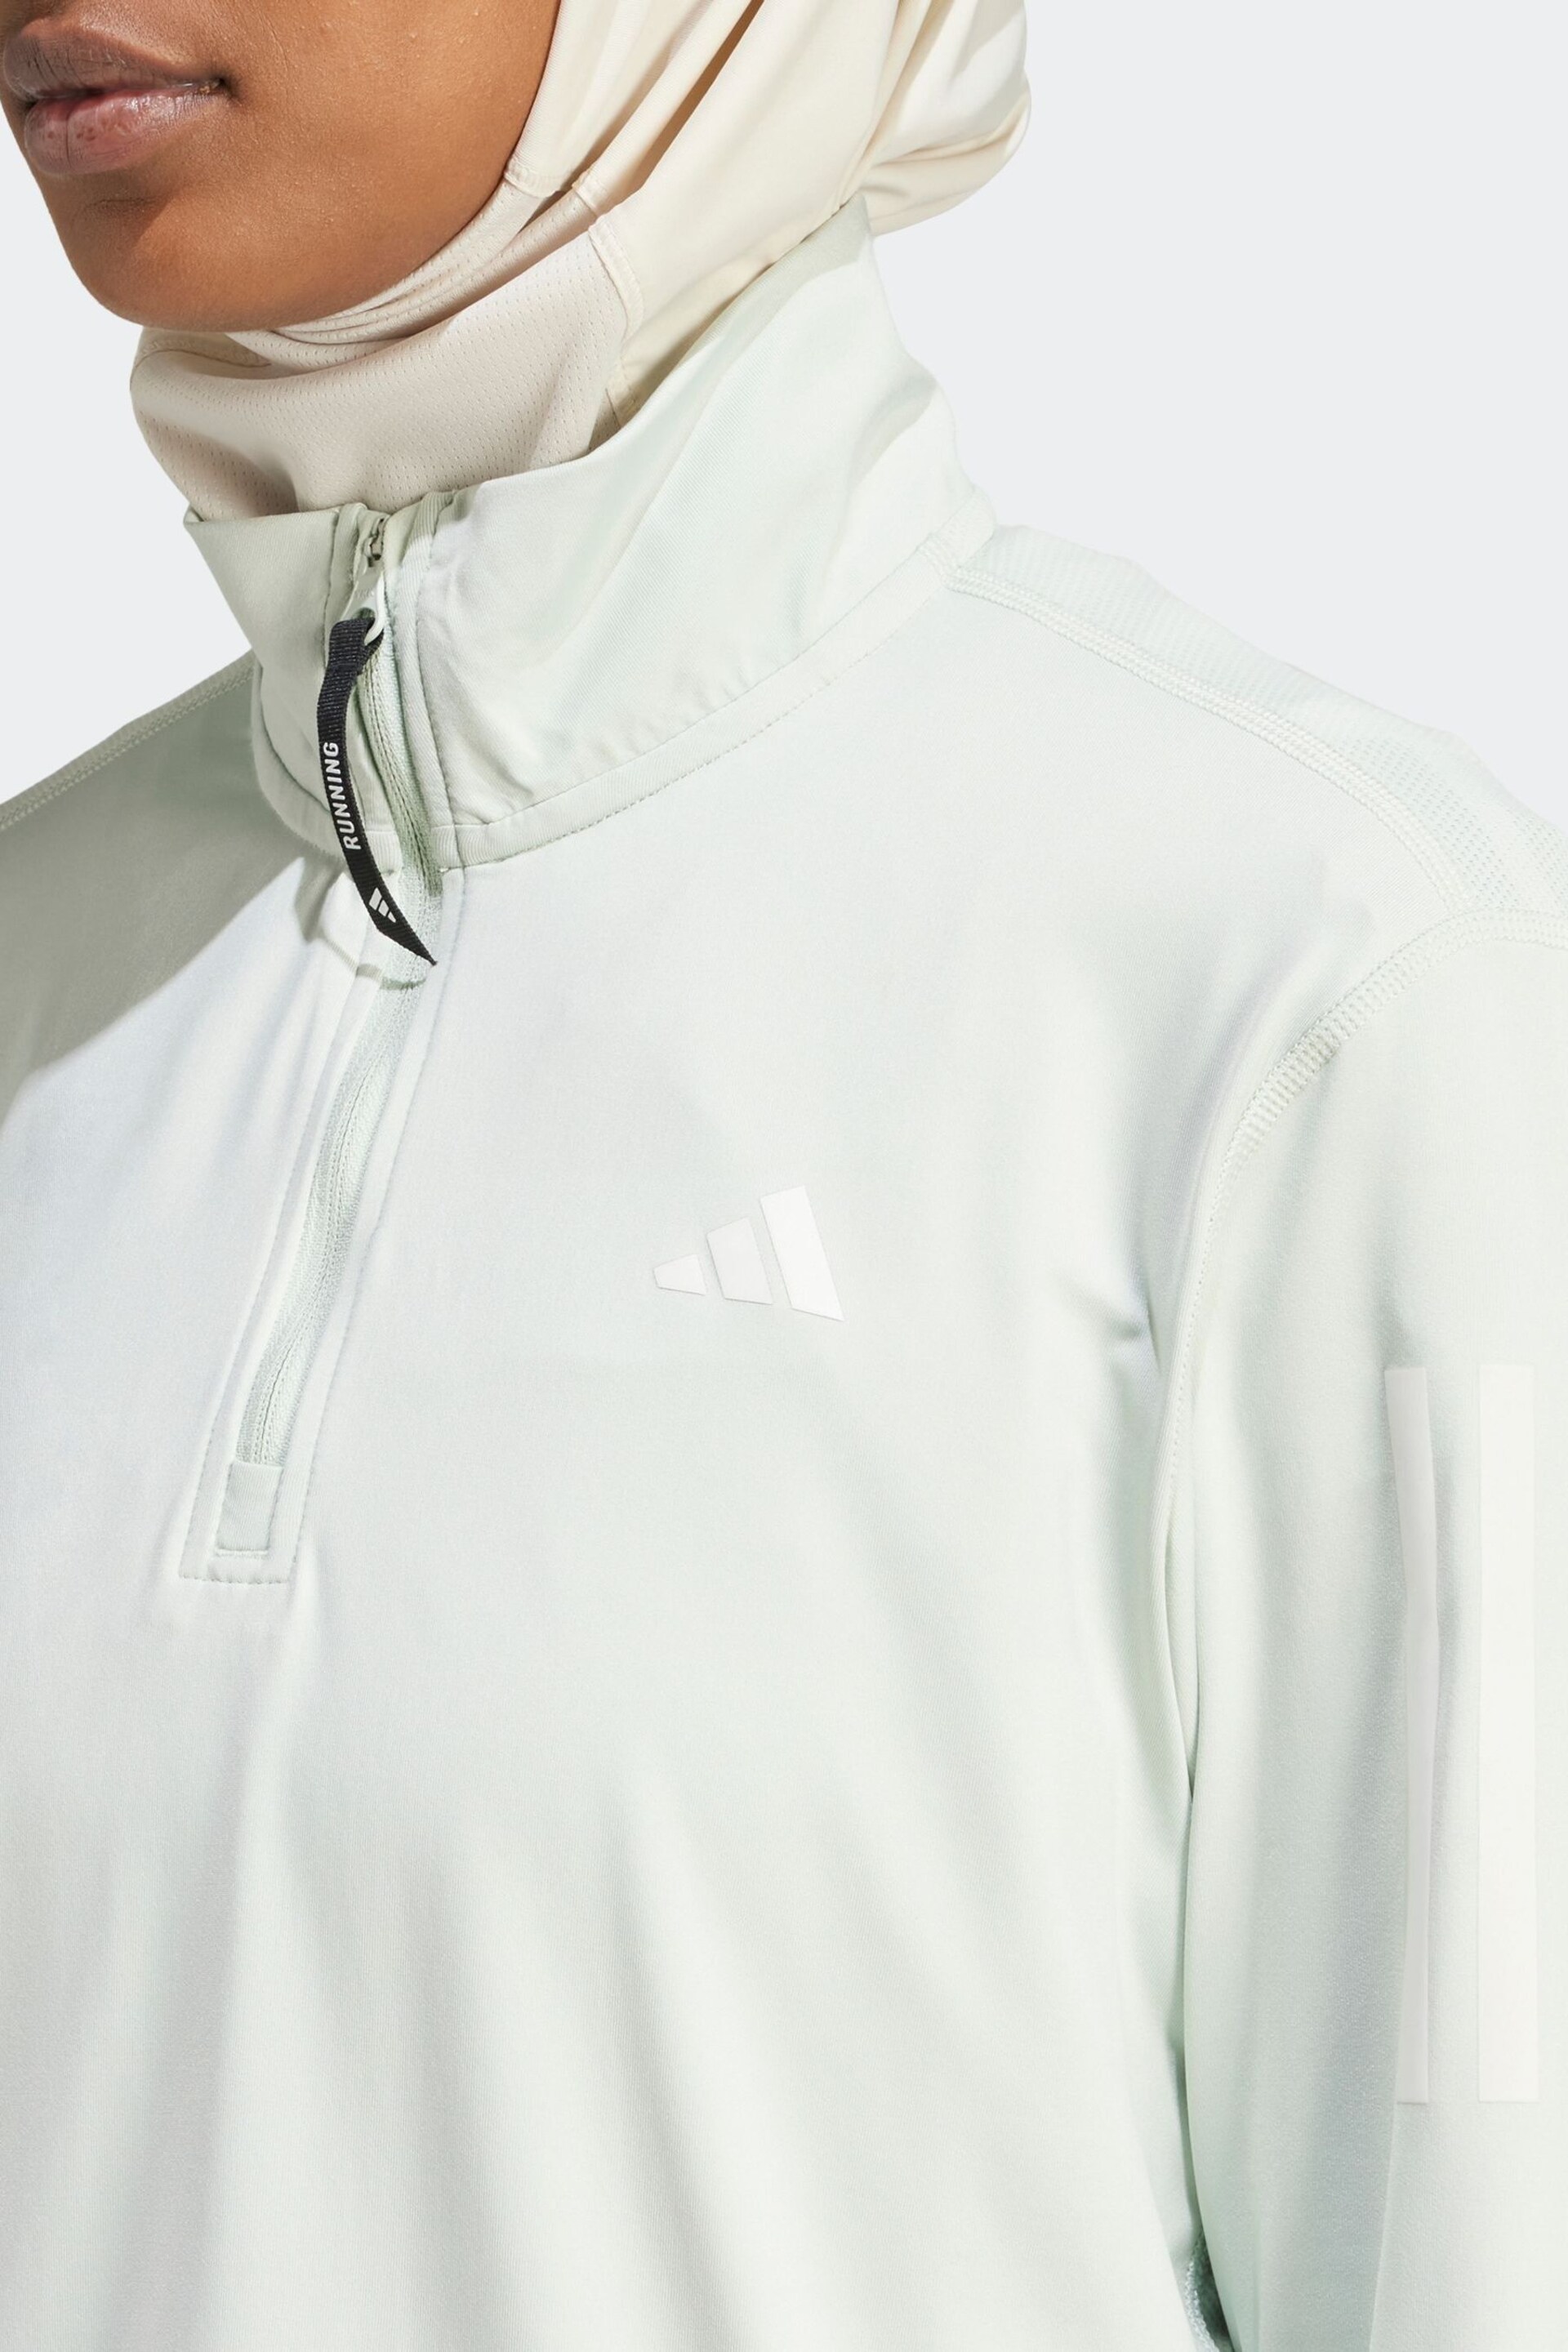 adidas Green Performance Own The Run Half-Zip Sweat Shirt - Image 4 of 5